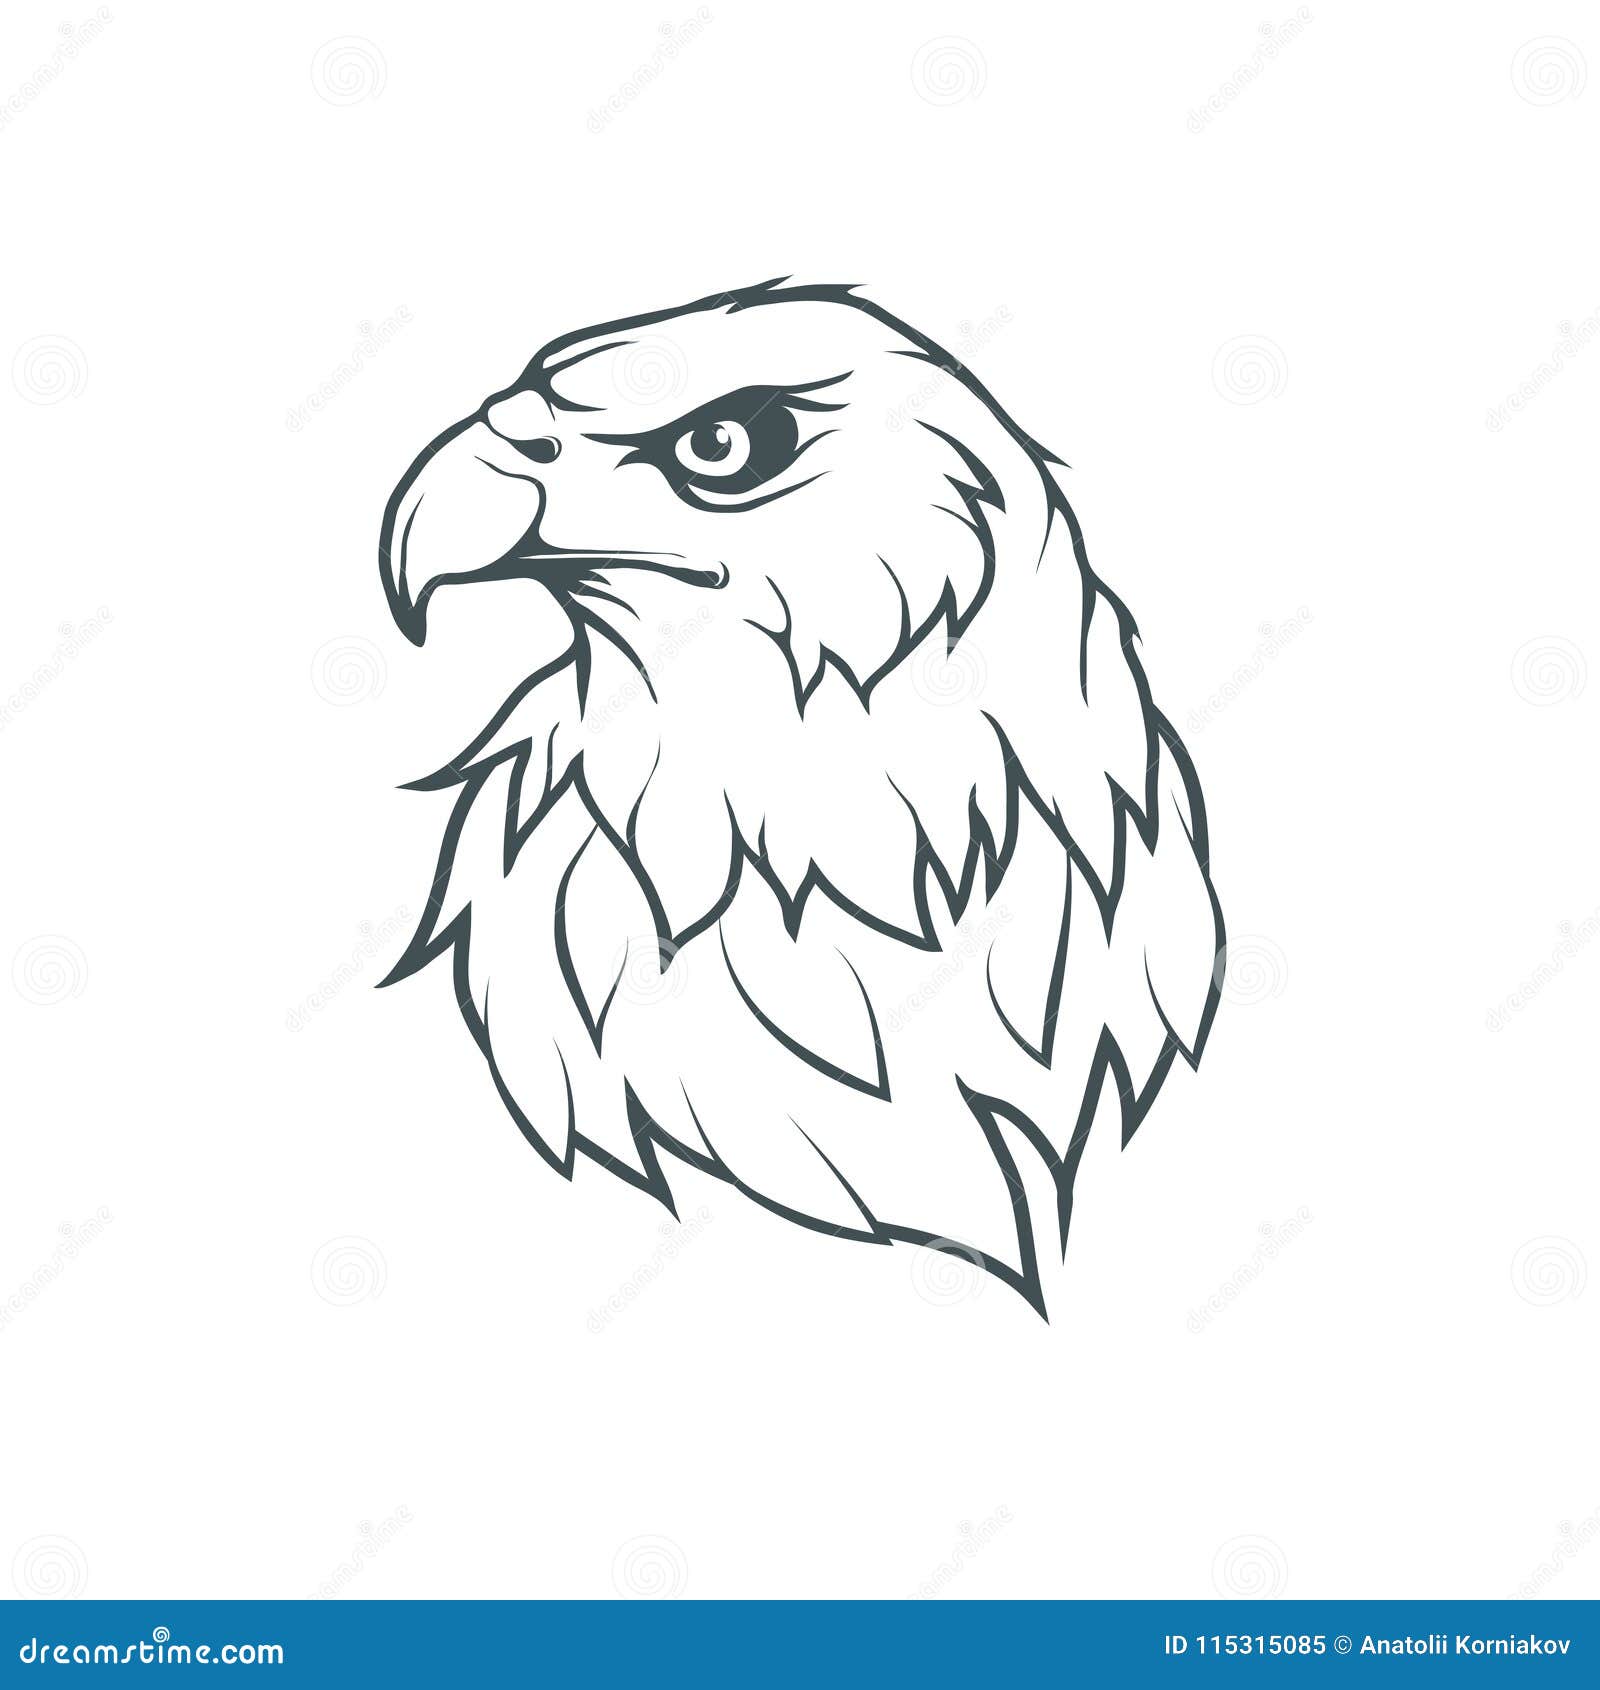 140788 Eagle Logo Images Stock Photos  Vectors  Shutterstock